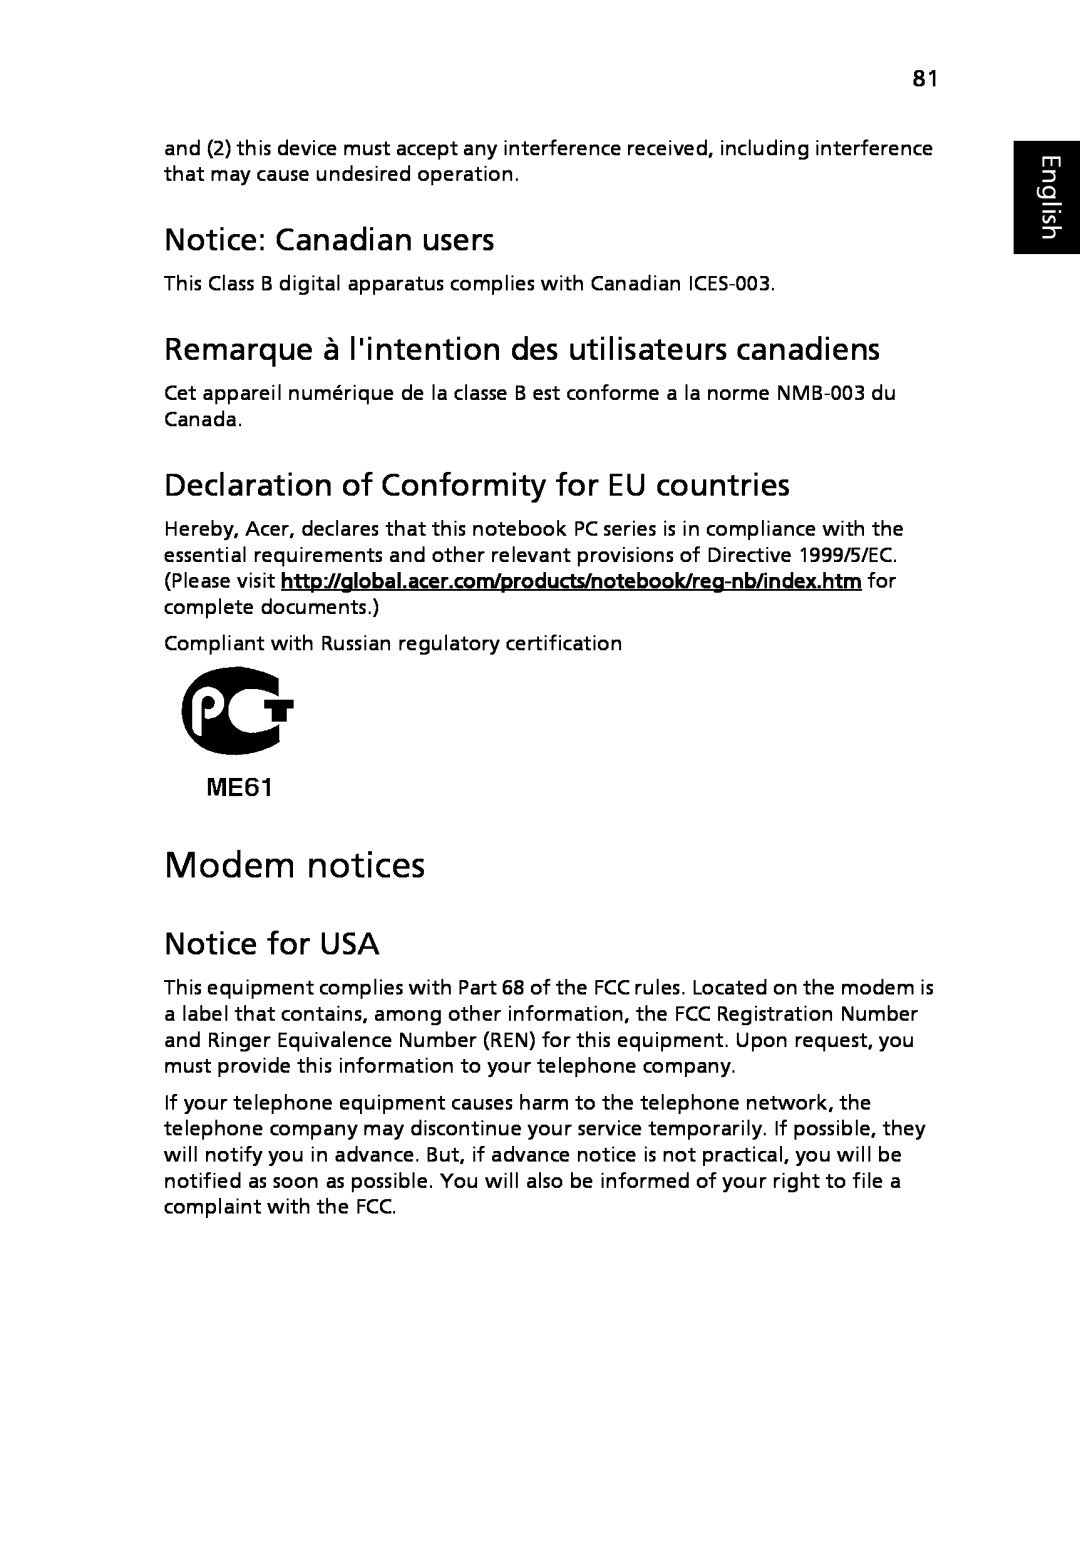 Acer 5010 Series Modem notices, Notice Canadian users, Remarque à lintention des utilisateurs canadiens, Notice for USA 